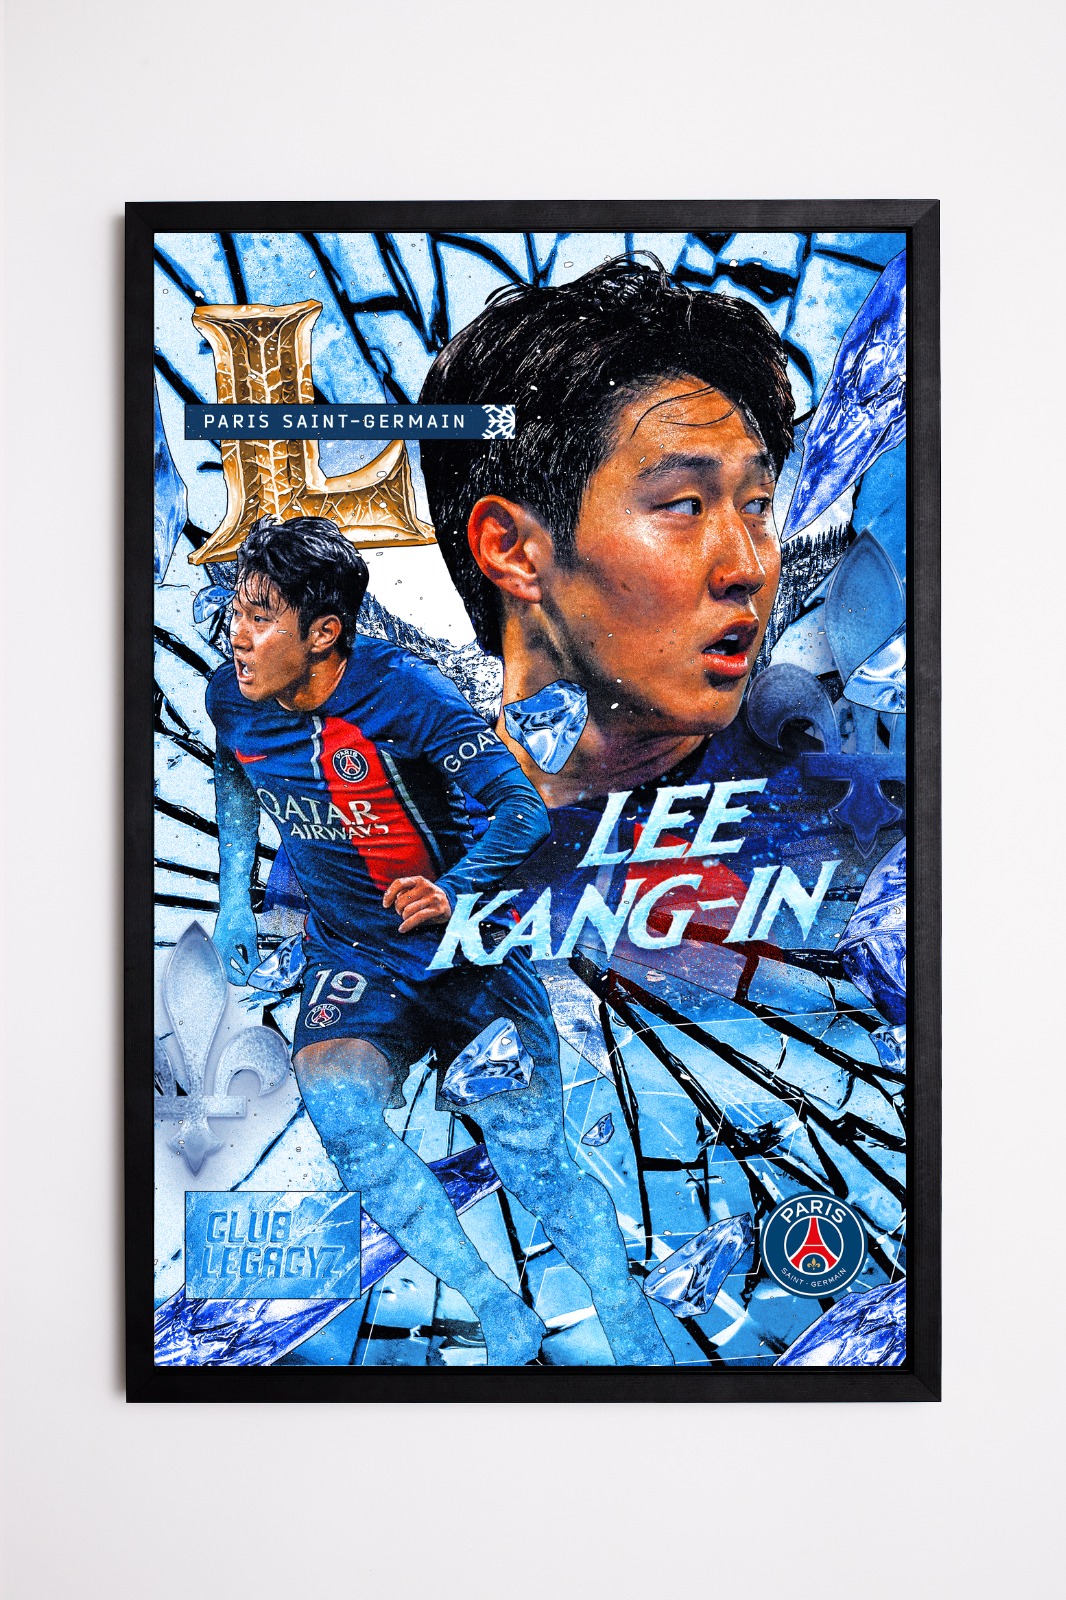 Paris Saint-Germain - Lee Kang-in Frozen Poster limited to 100